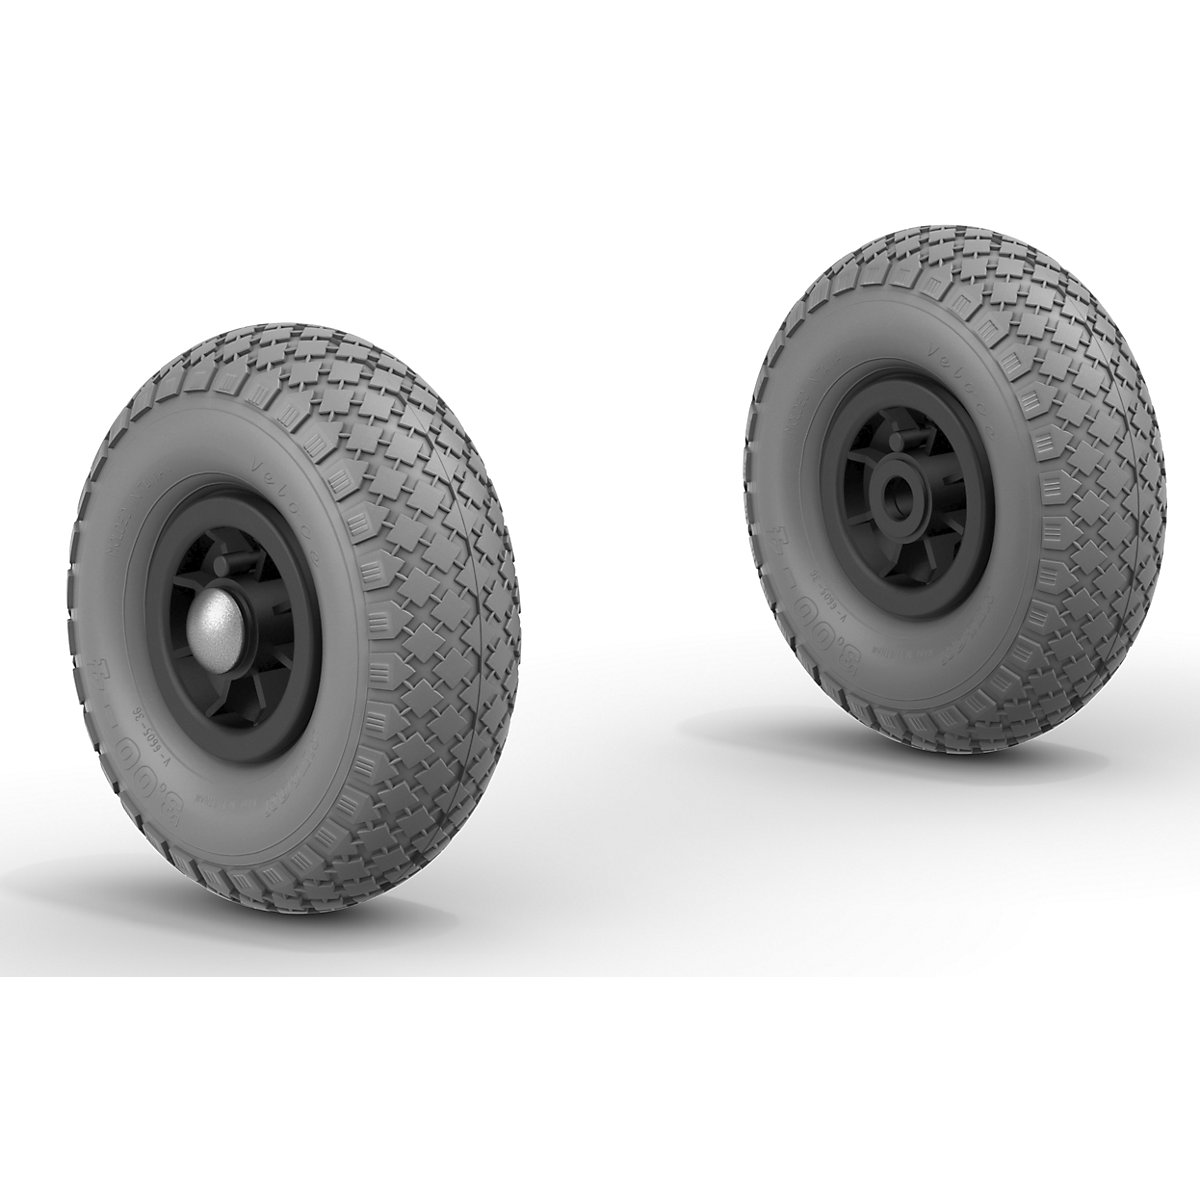 EUROKRAFTpro – Wheel set for sack truck, pack of 2, PU tyres